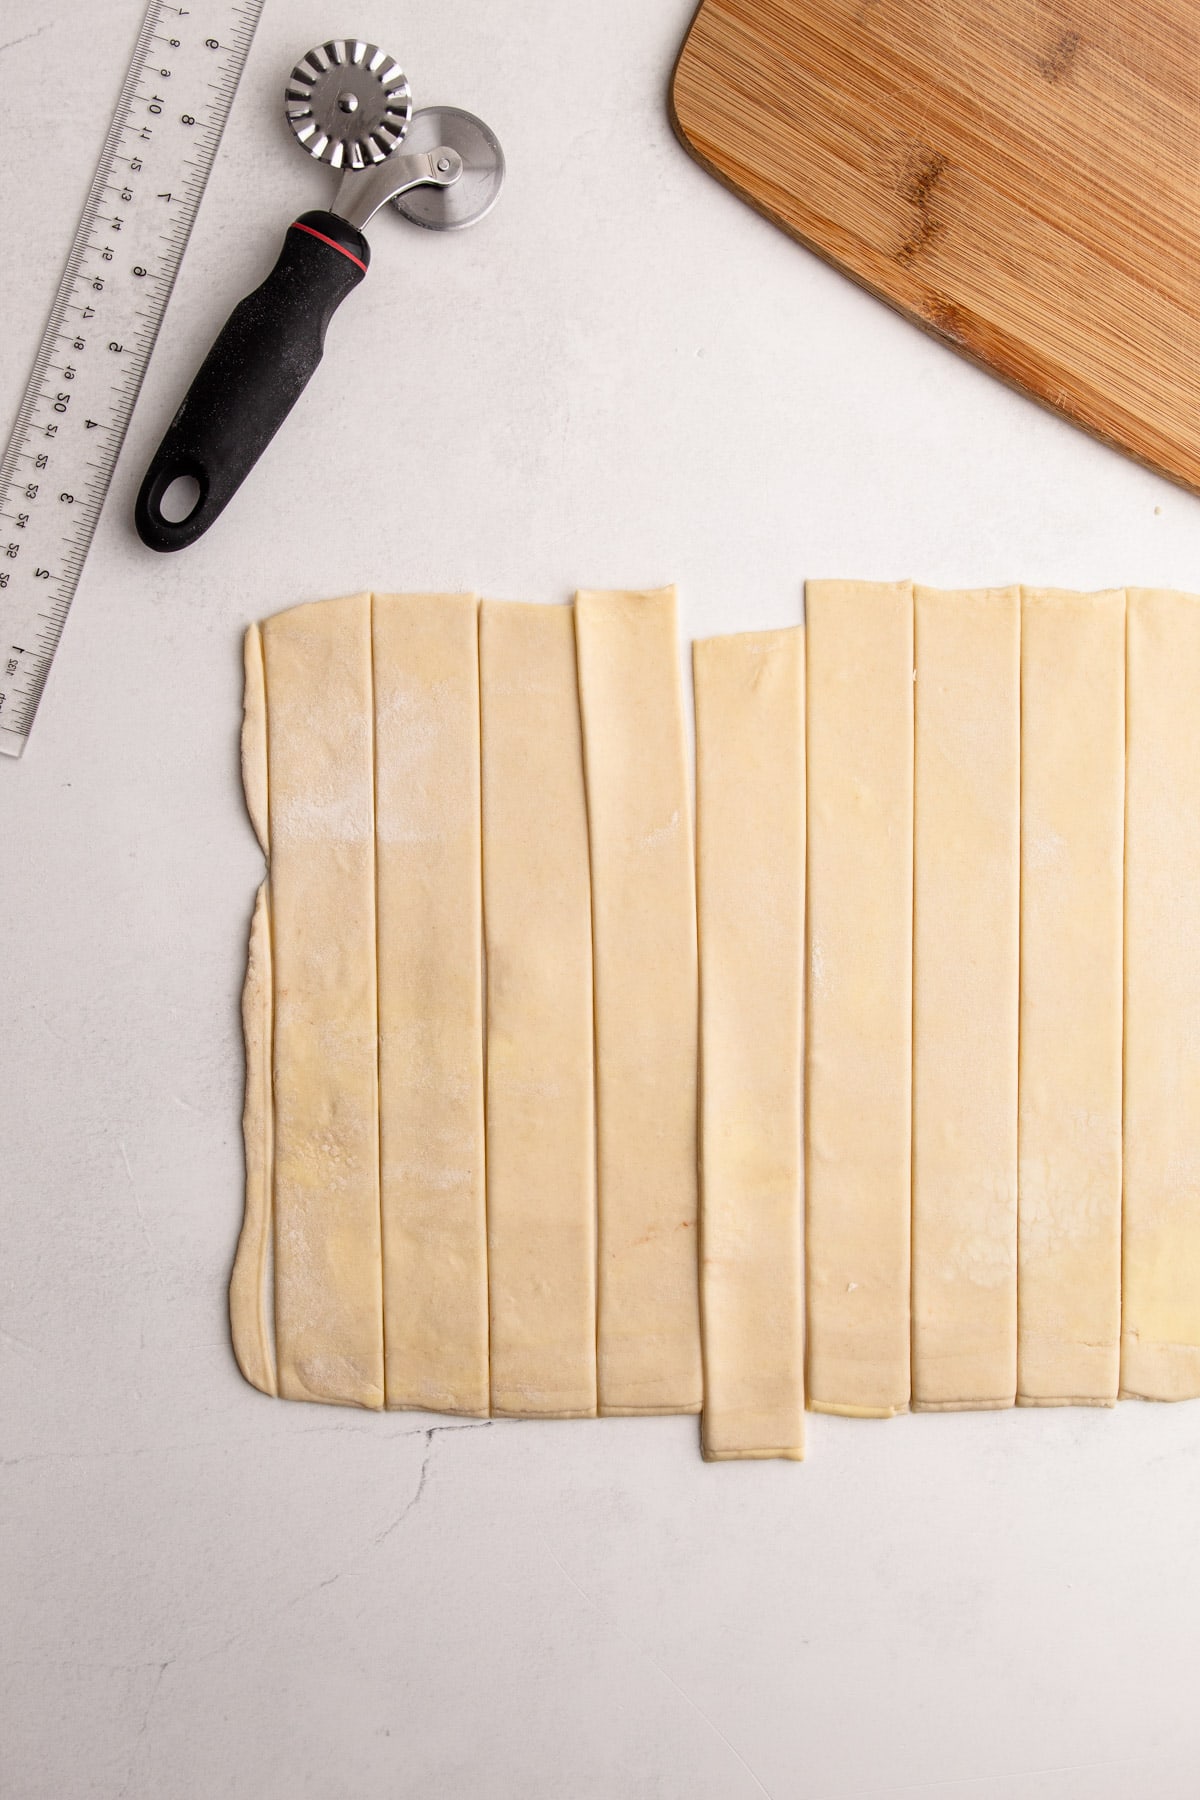 Strips of butter pie dough cut to make a lattice pie.